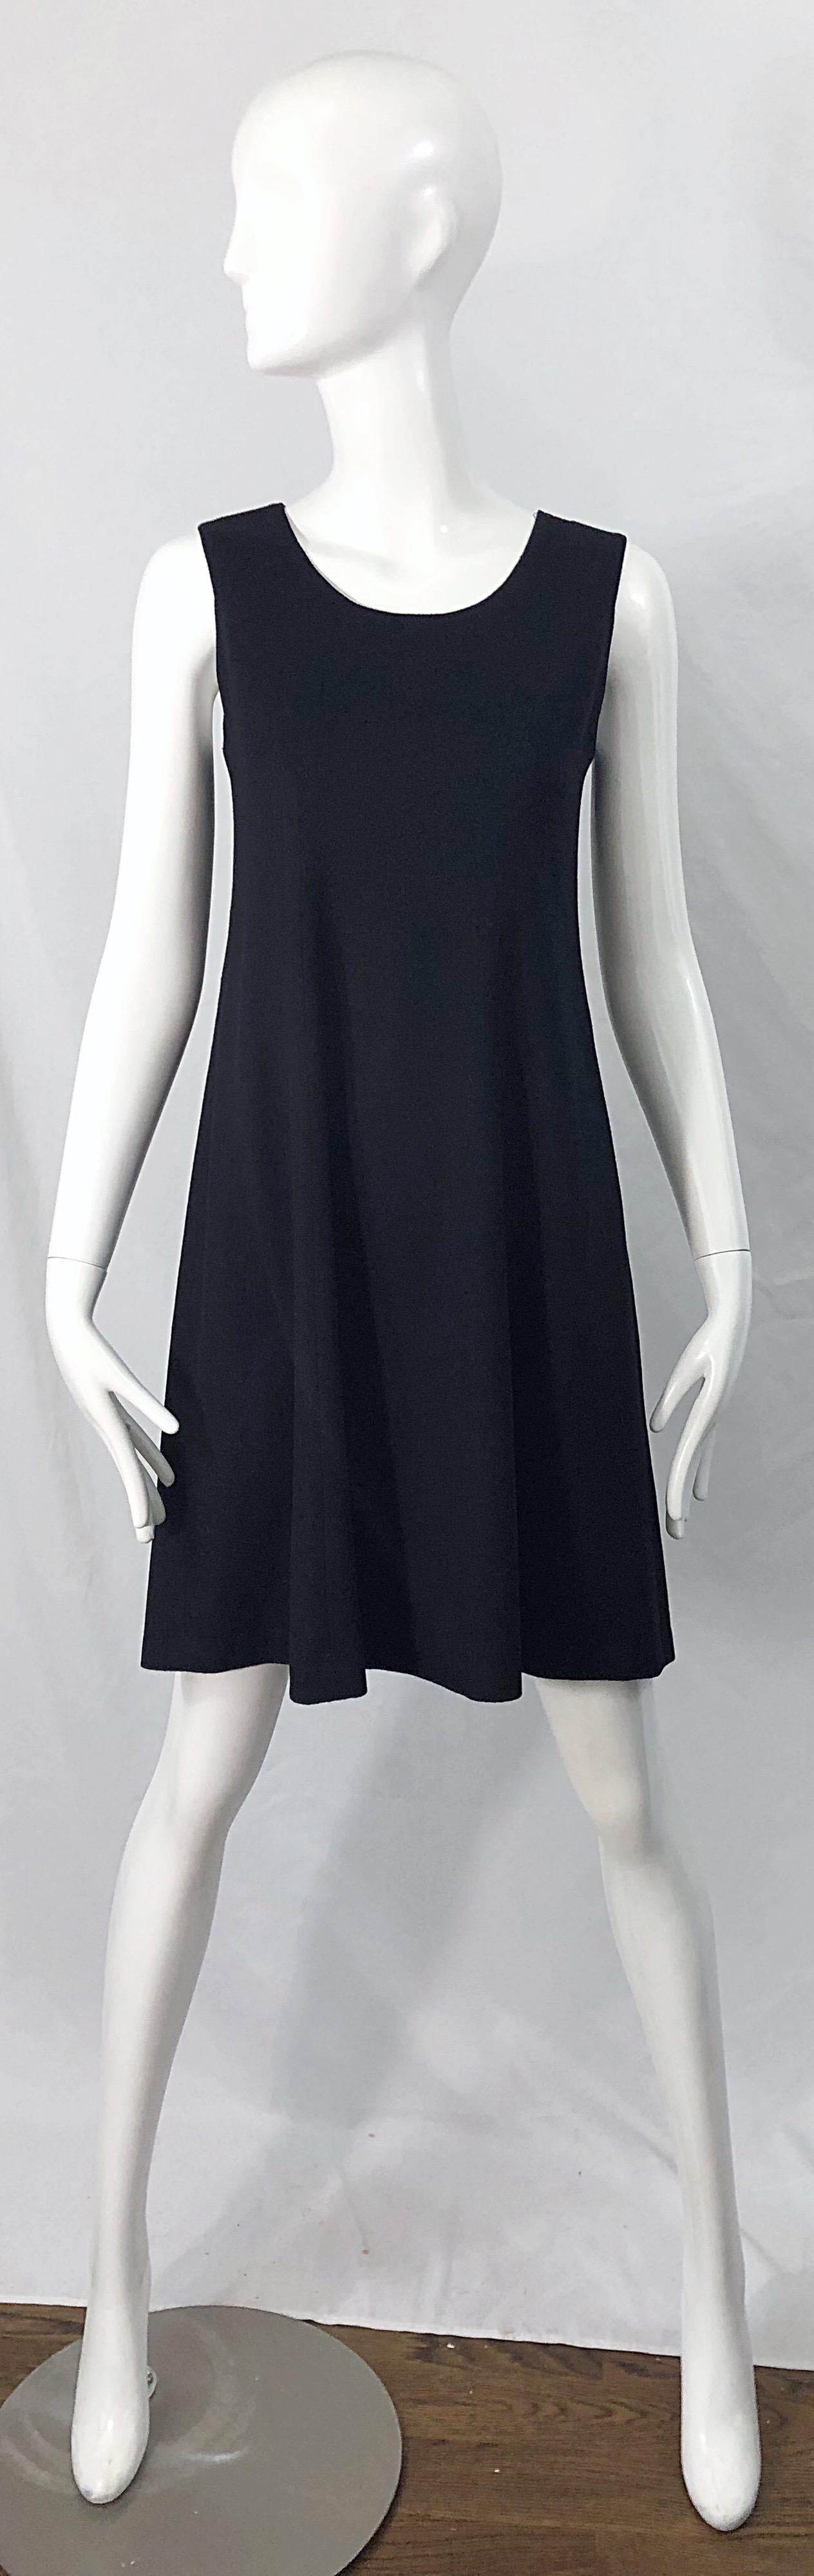 1990s Morgan Le Fay by Liliana Casbal Black Wool Minimalist Vintage 90s Dress For Sale 8